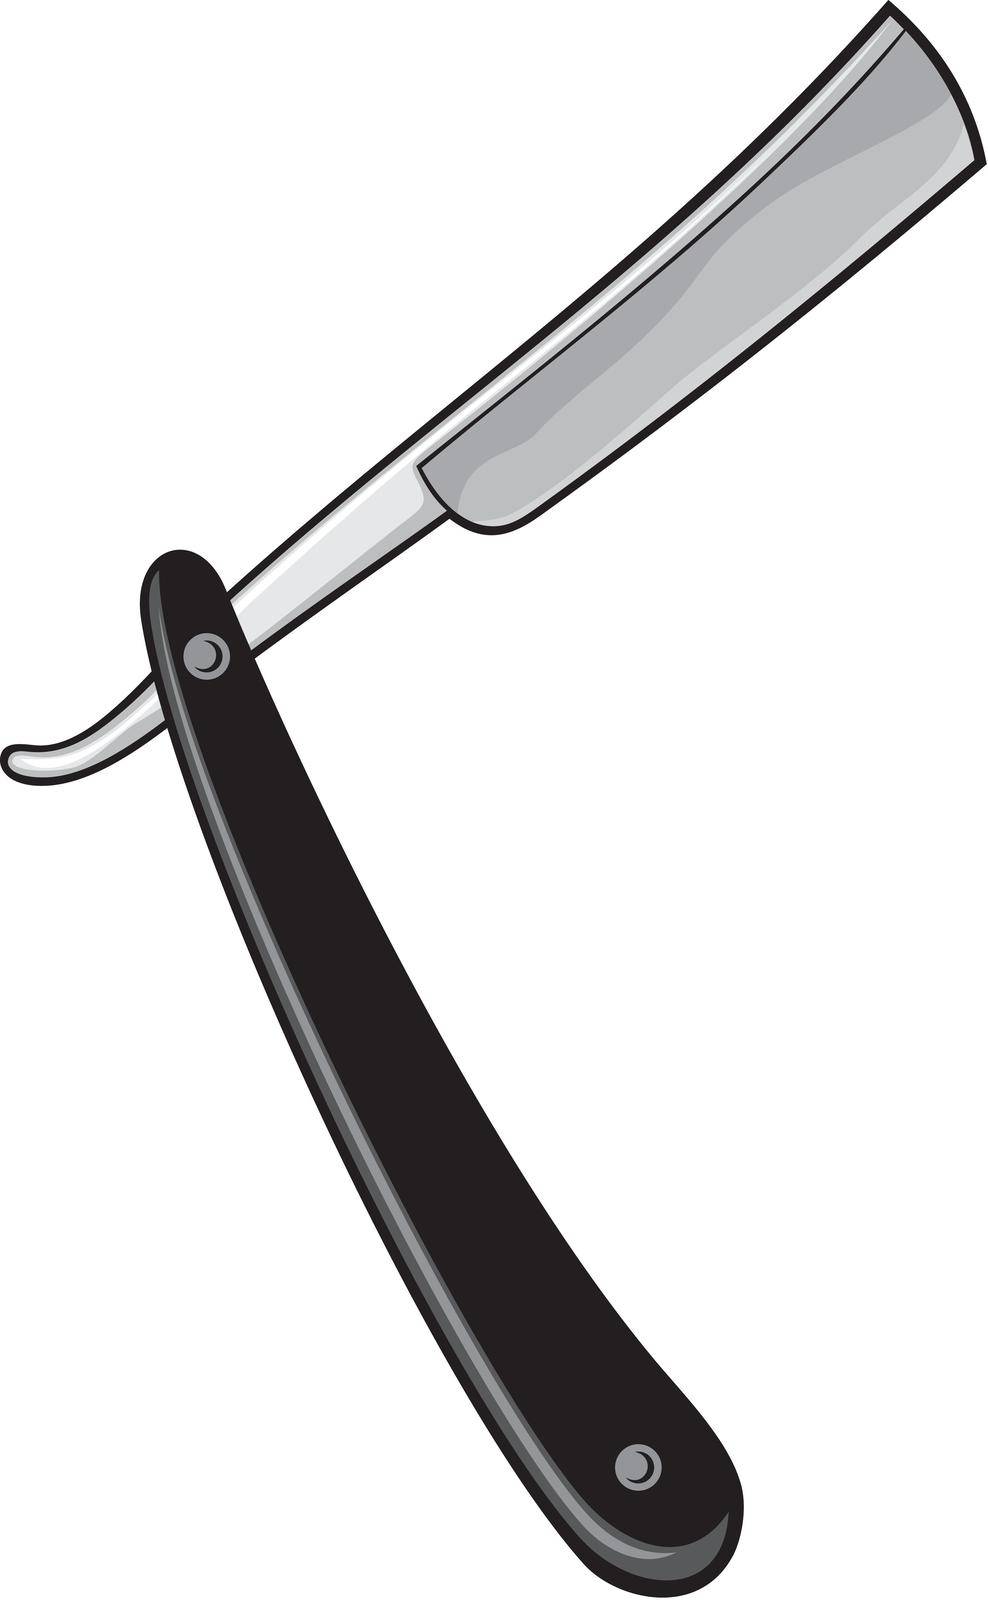 Shaving (barber) razor knife vector illustration